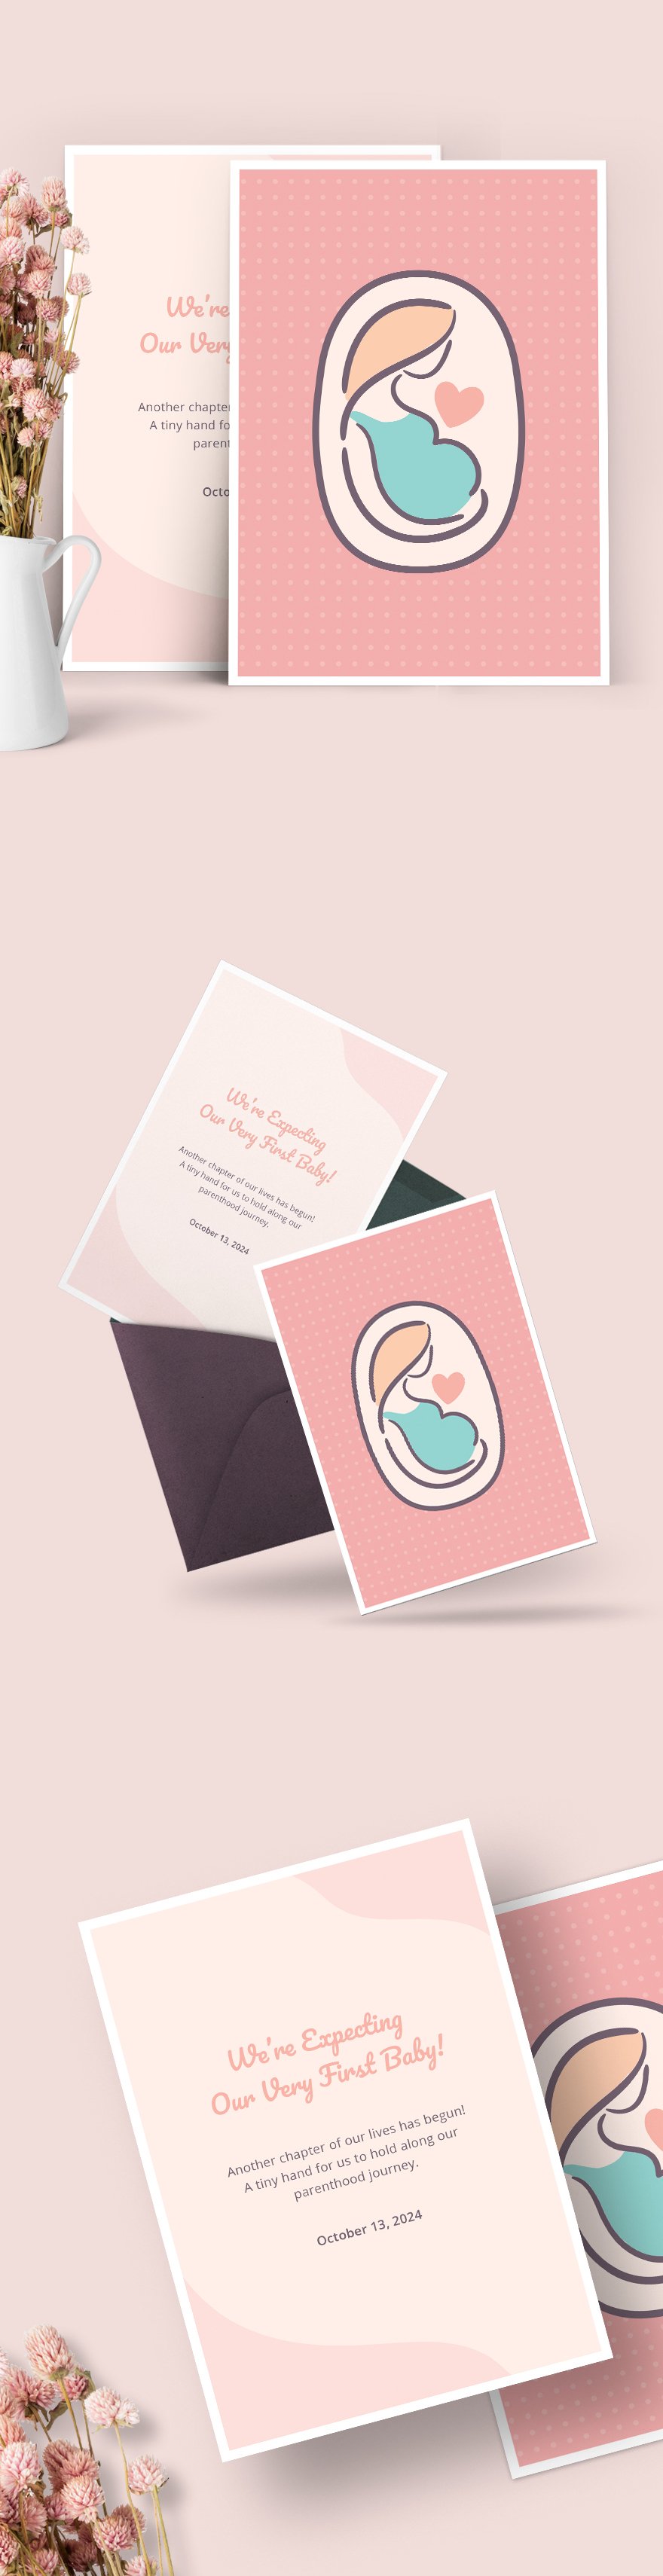 Free Pregnancy Announcement Card Template